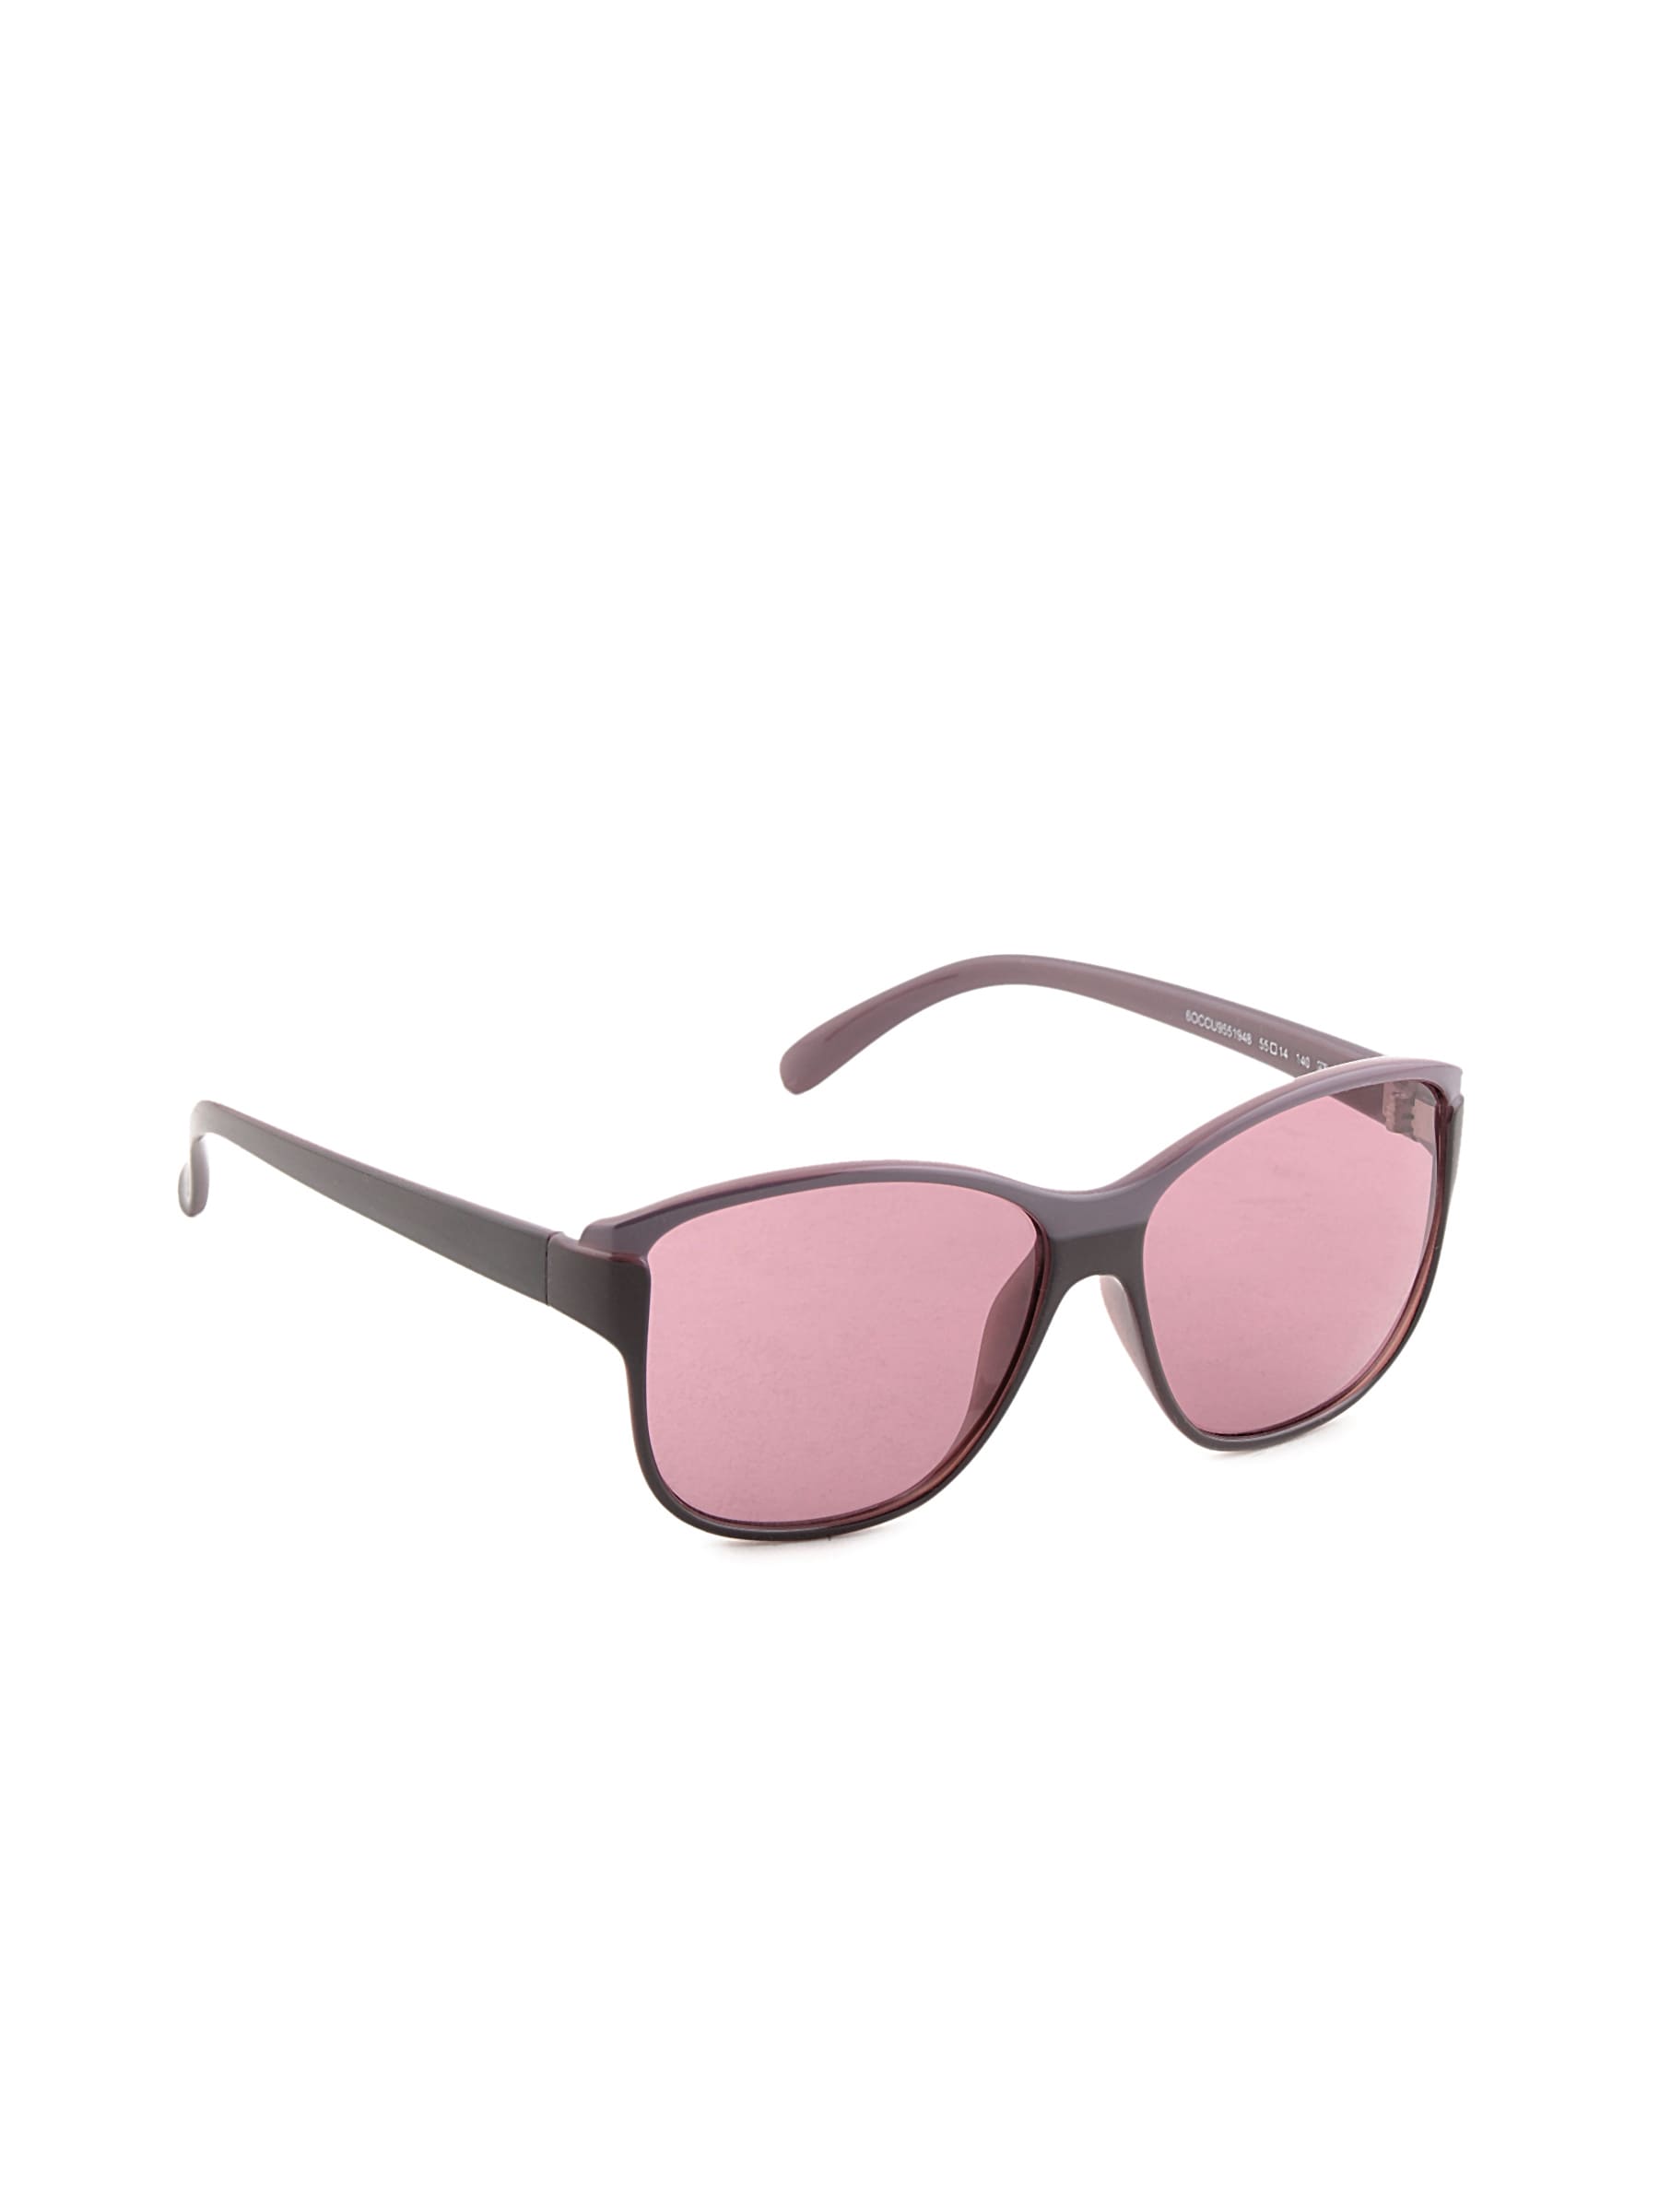 United Colors of Benetton Women Casual Sunglasses